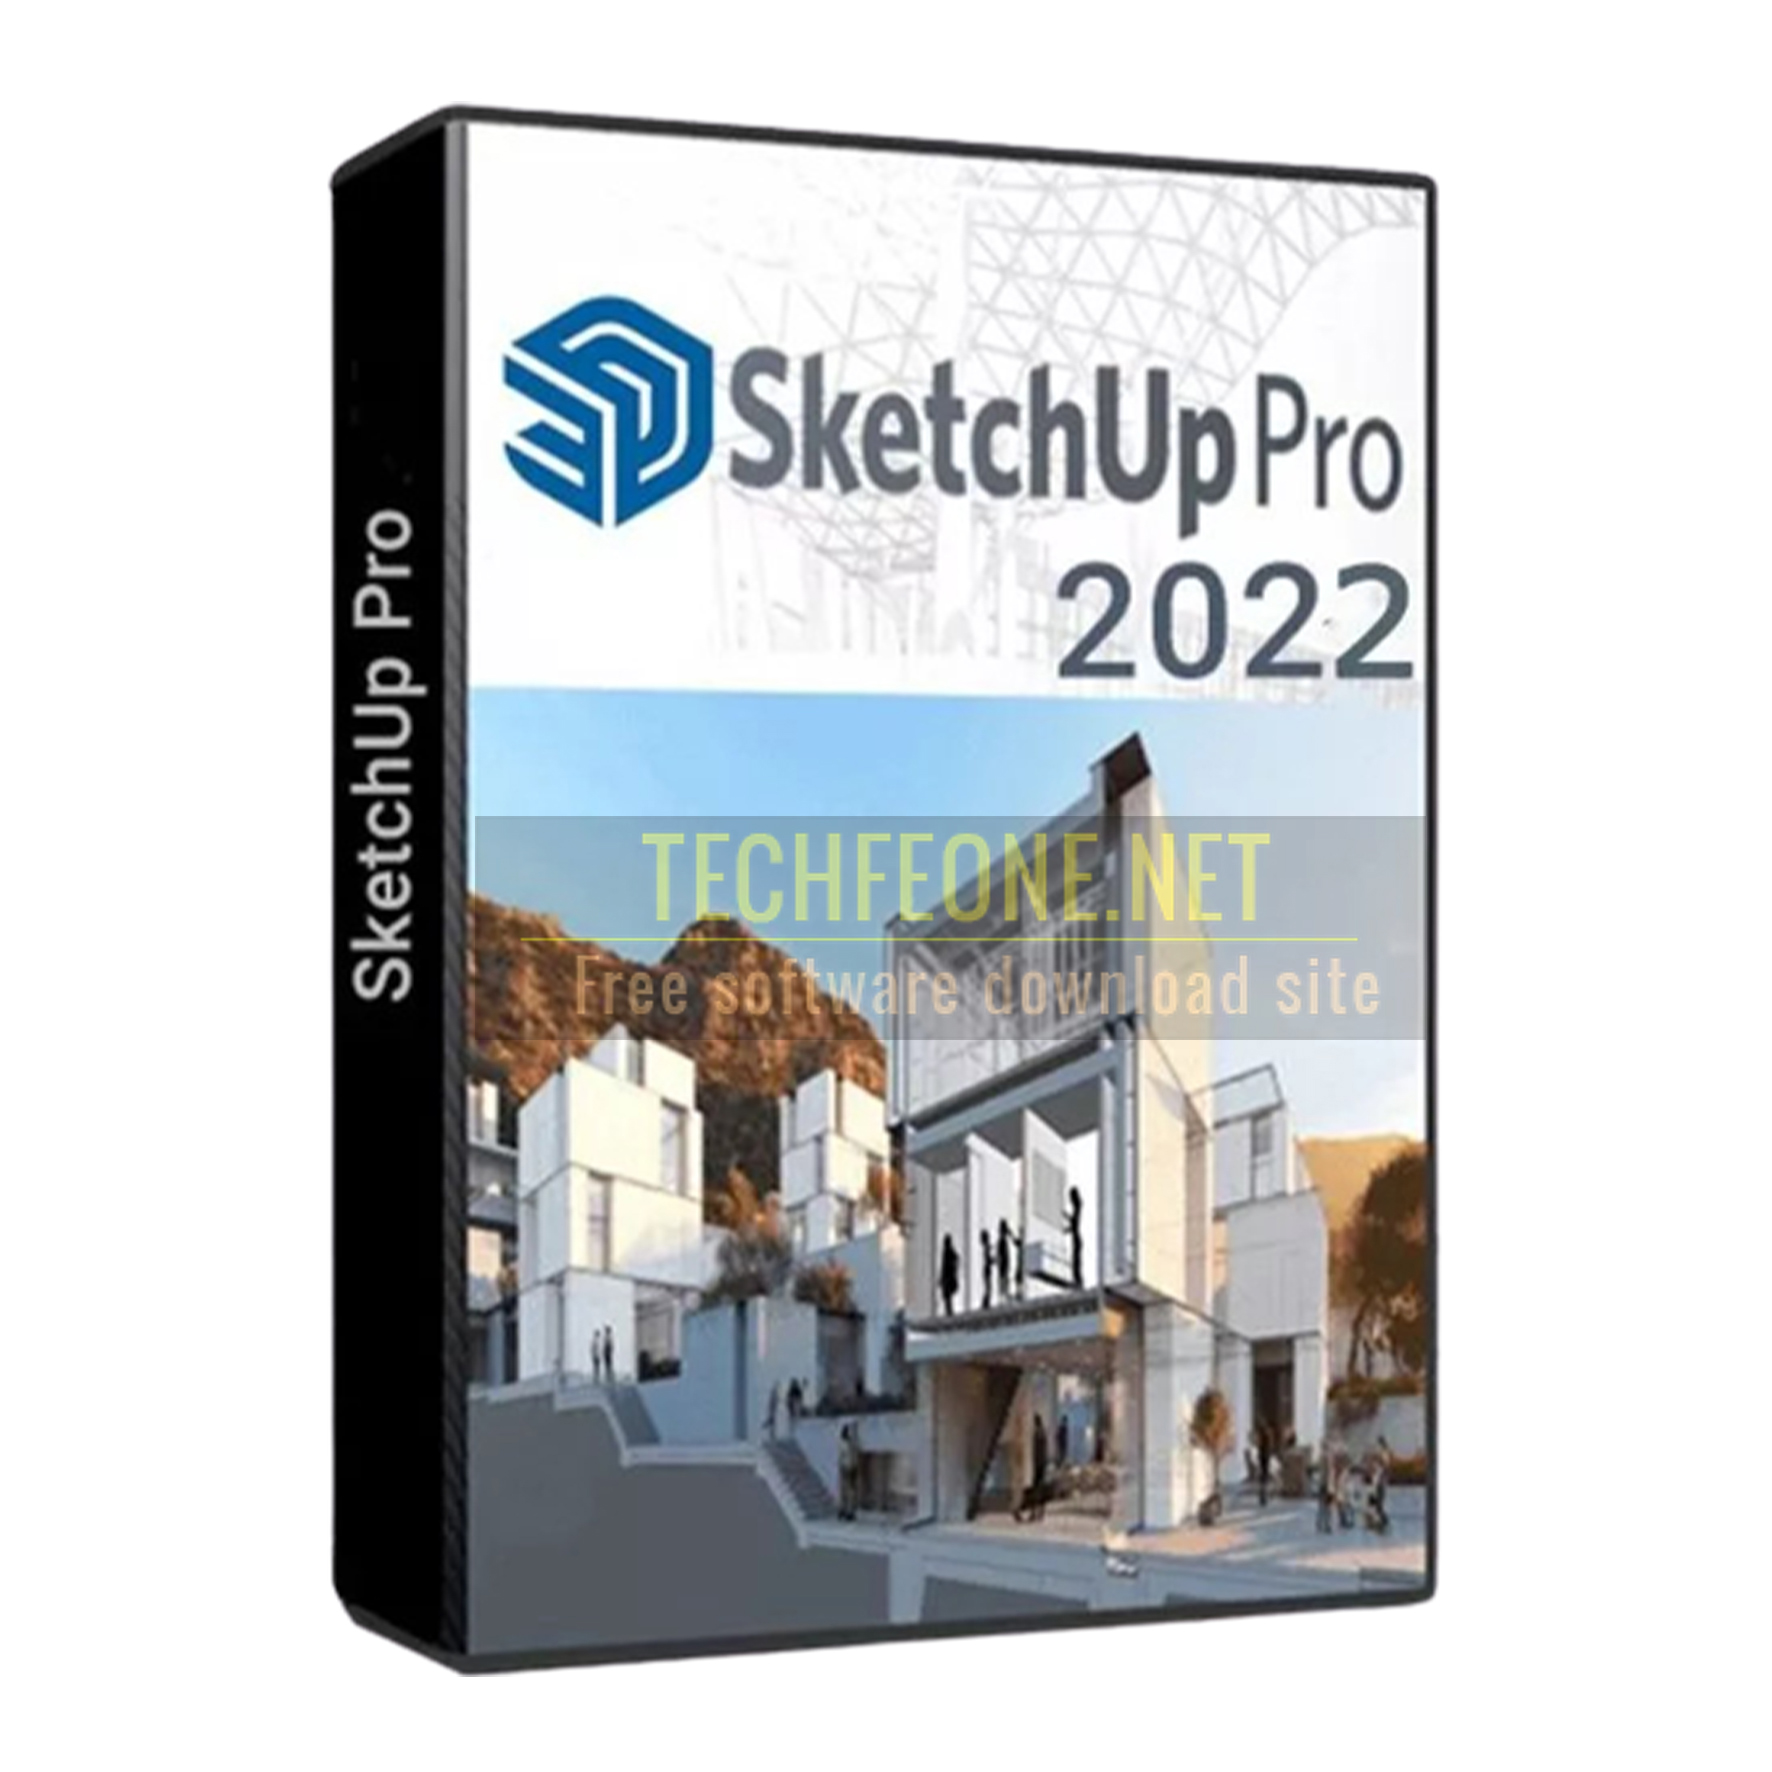 sketchup pro 2022 free download